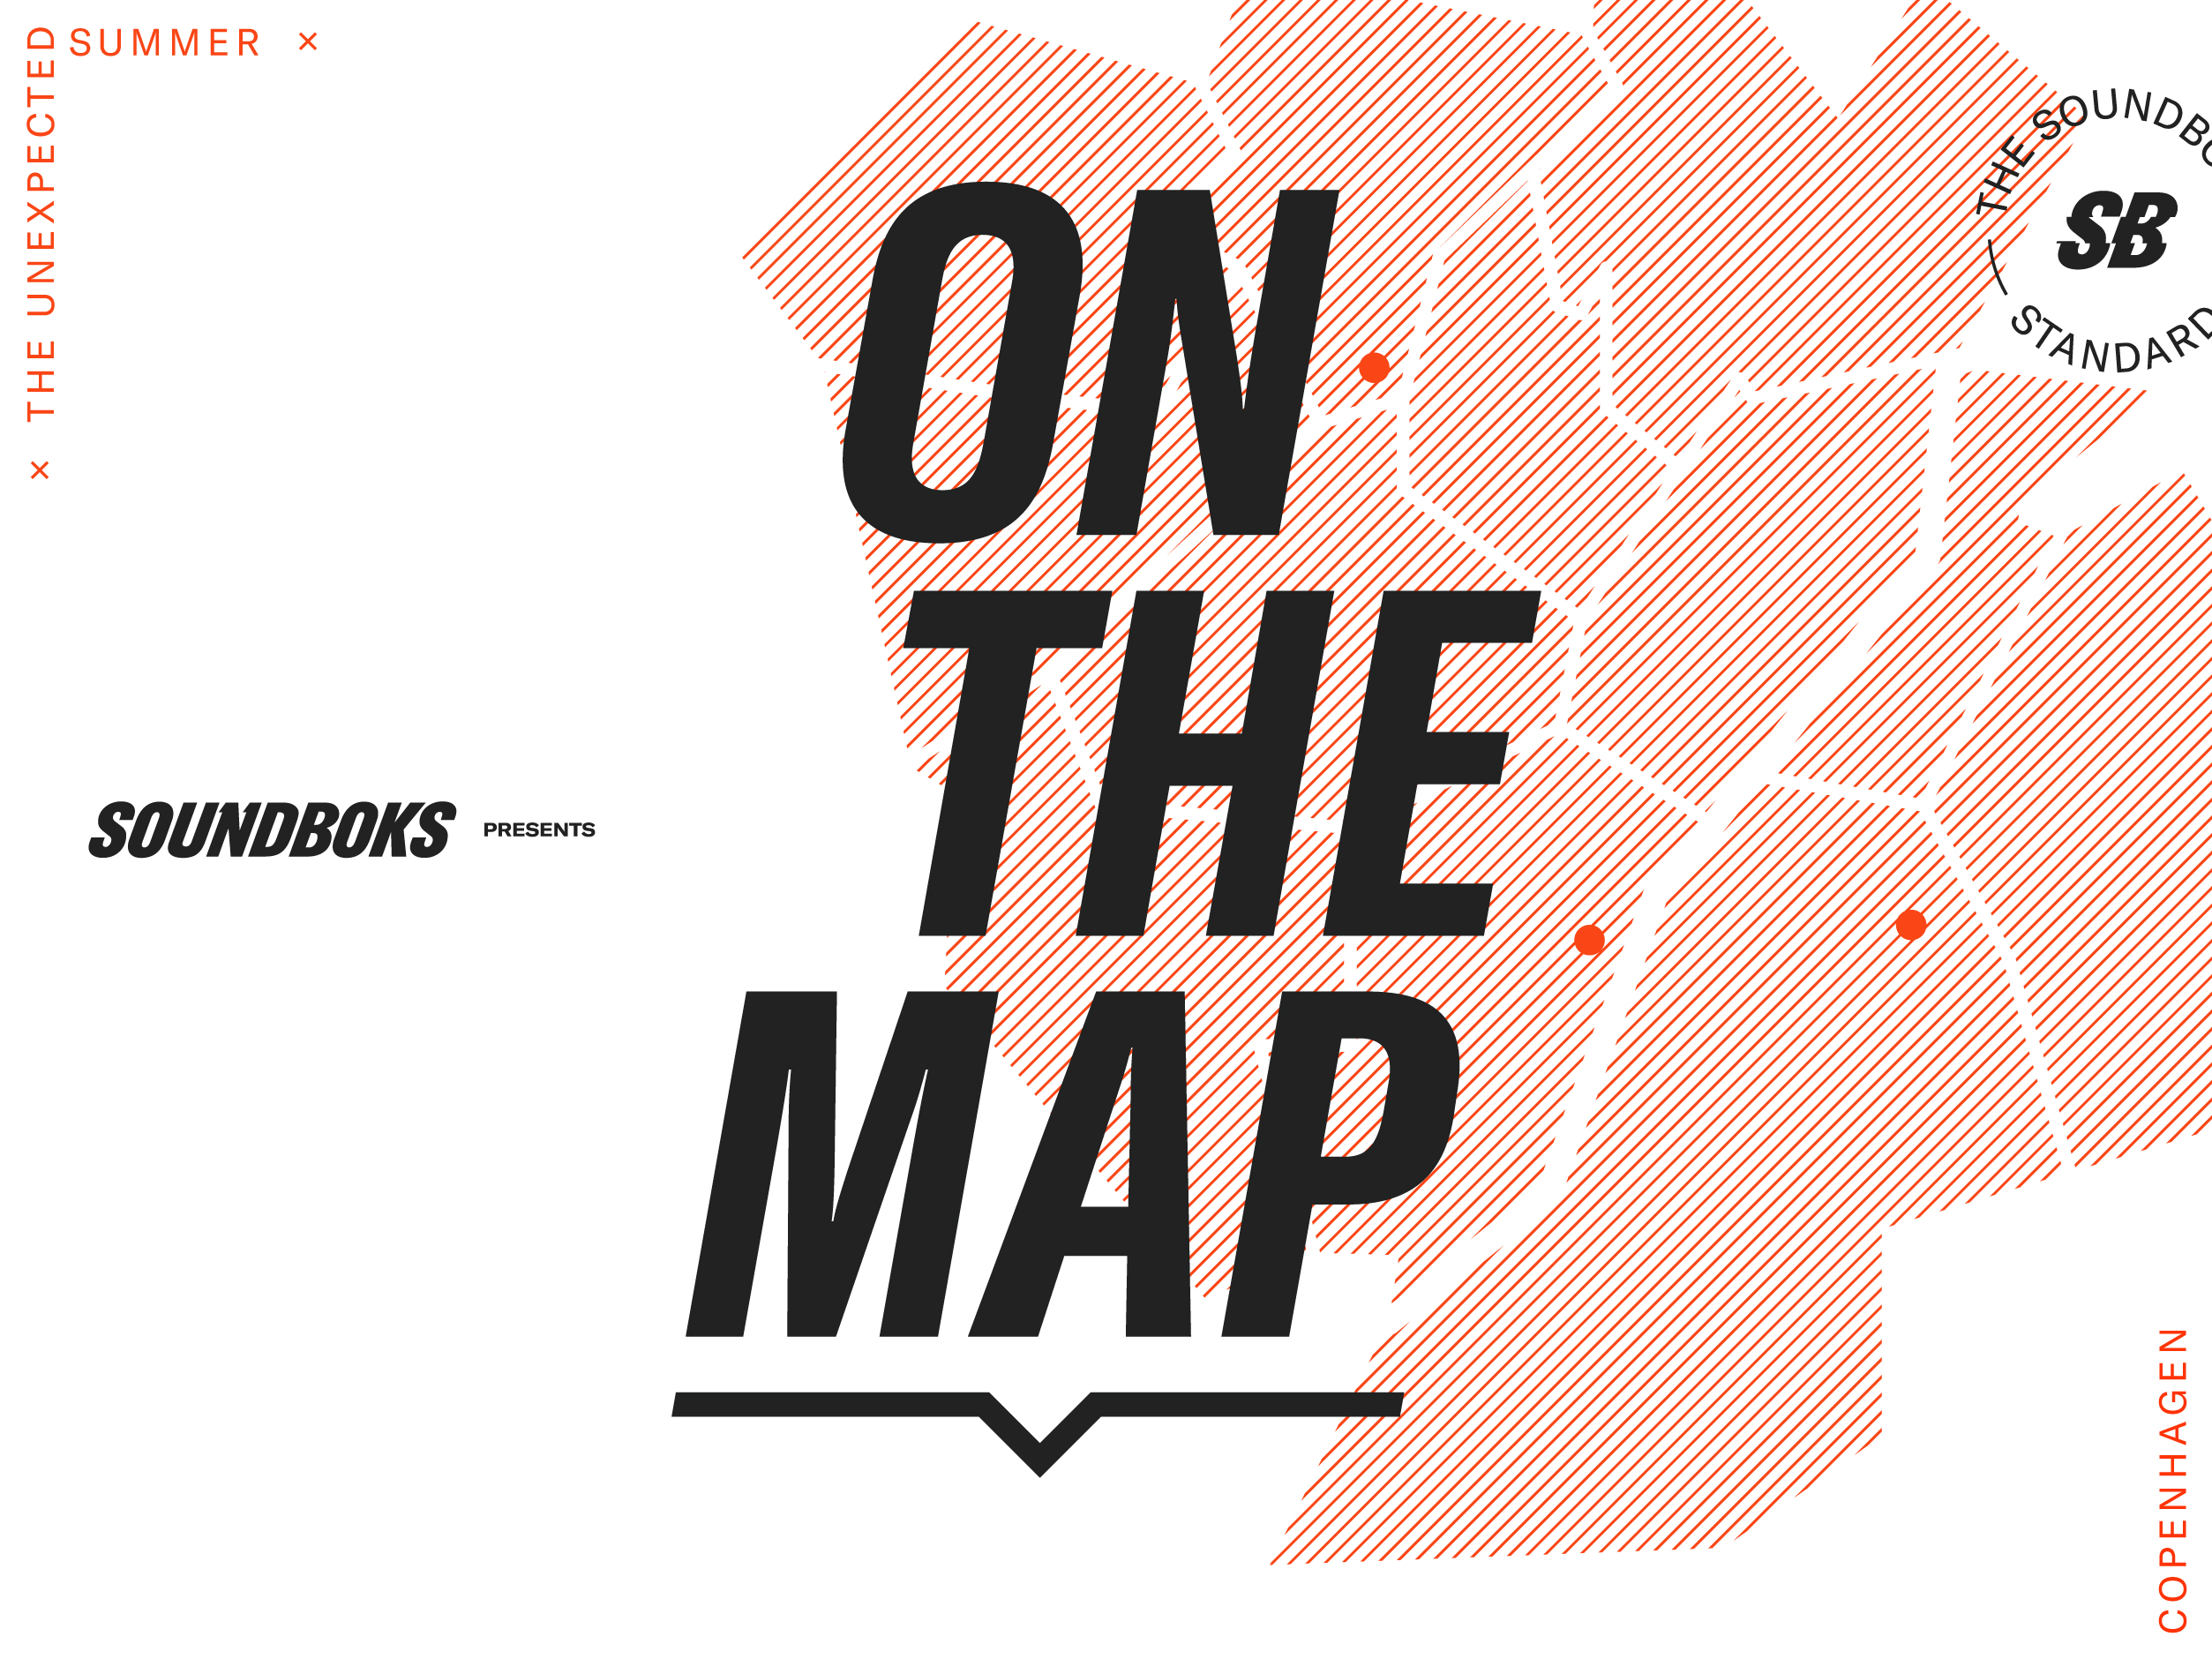 SOUNDBOKS presents the On the Map event series in Copenhagen